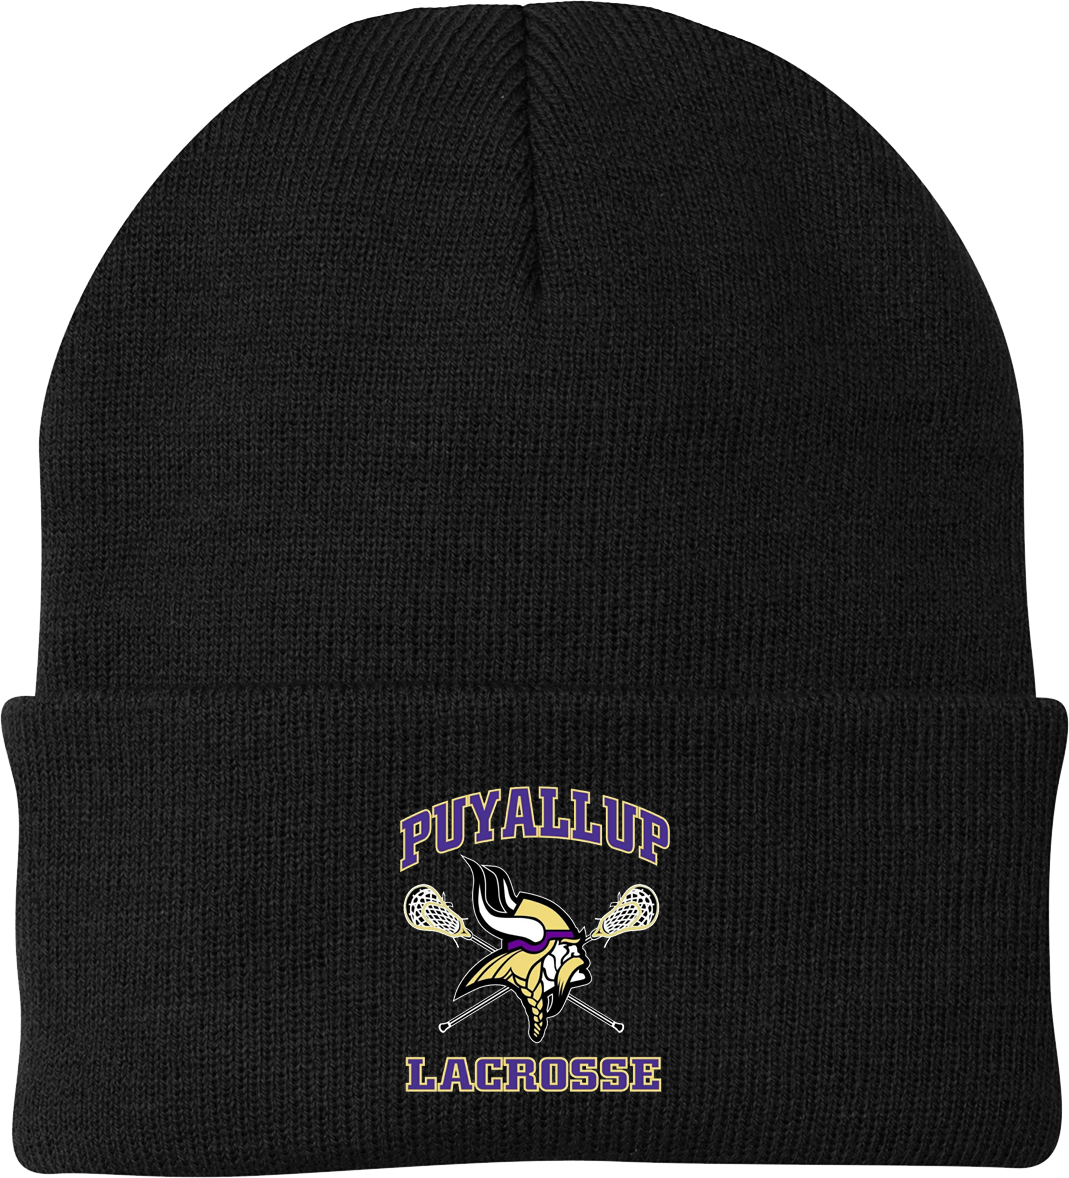 Puyallup Lacrosse Black Knit Beanie